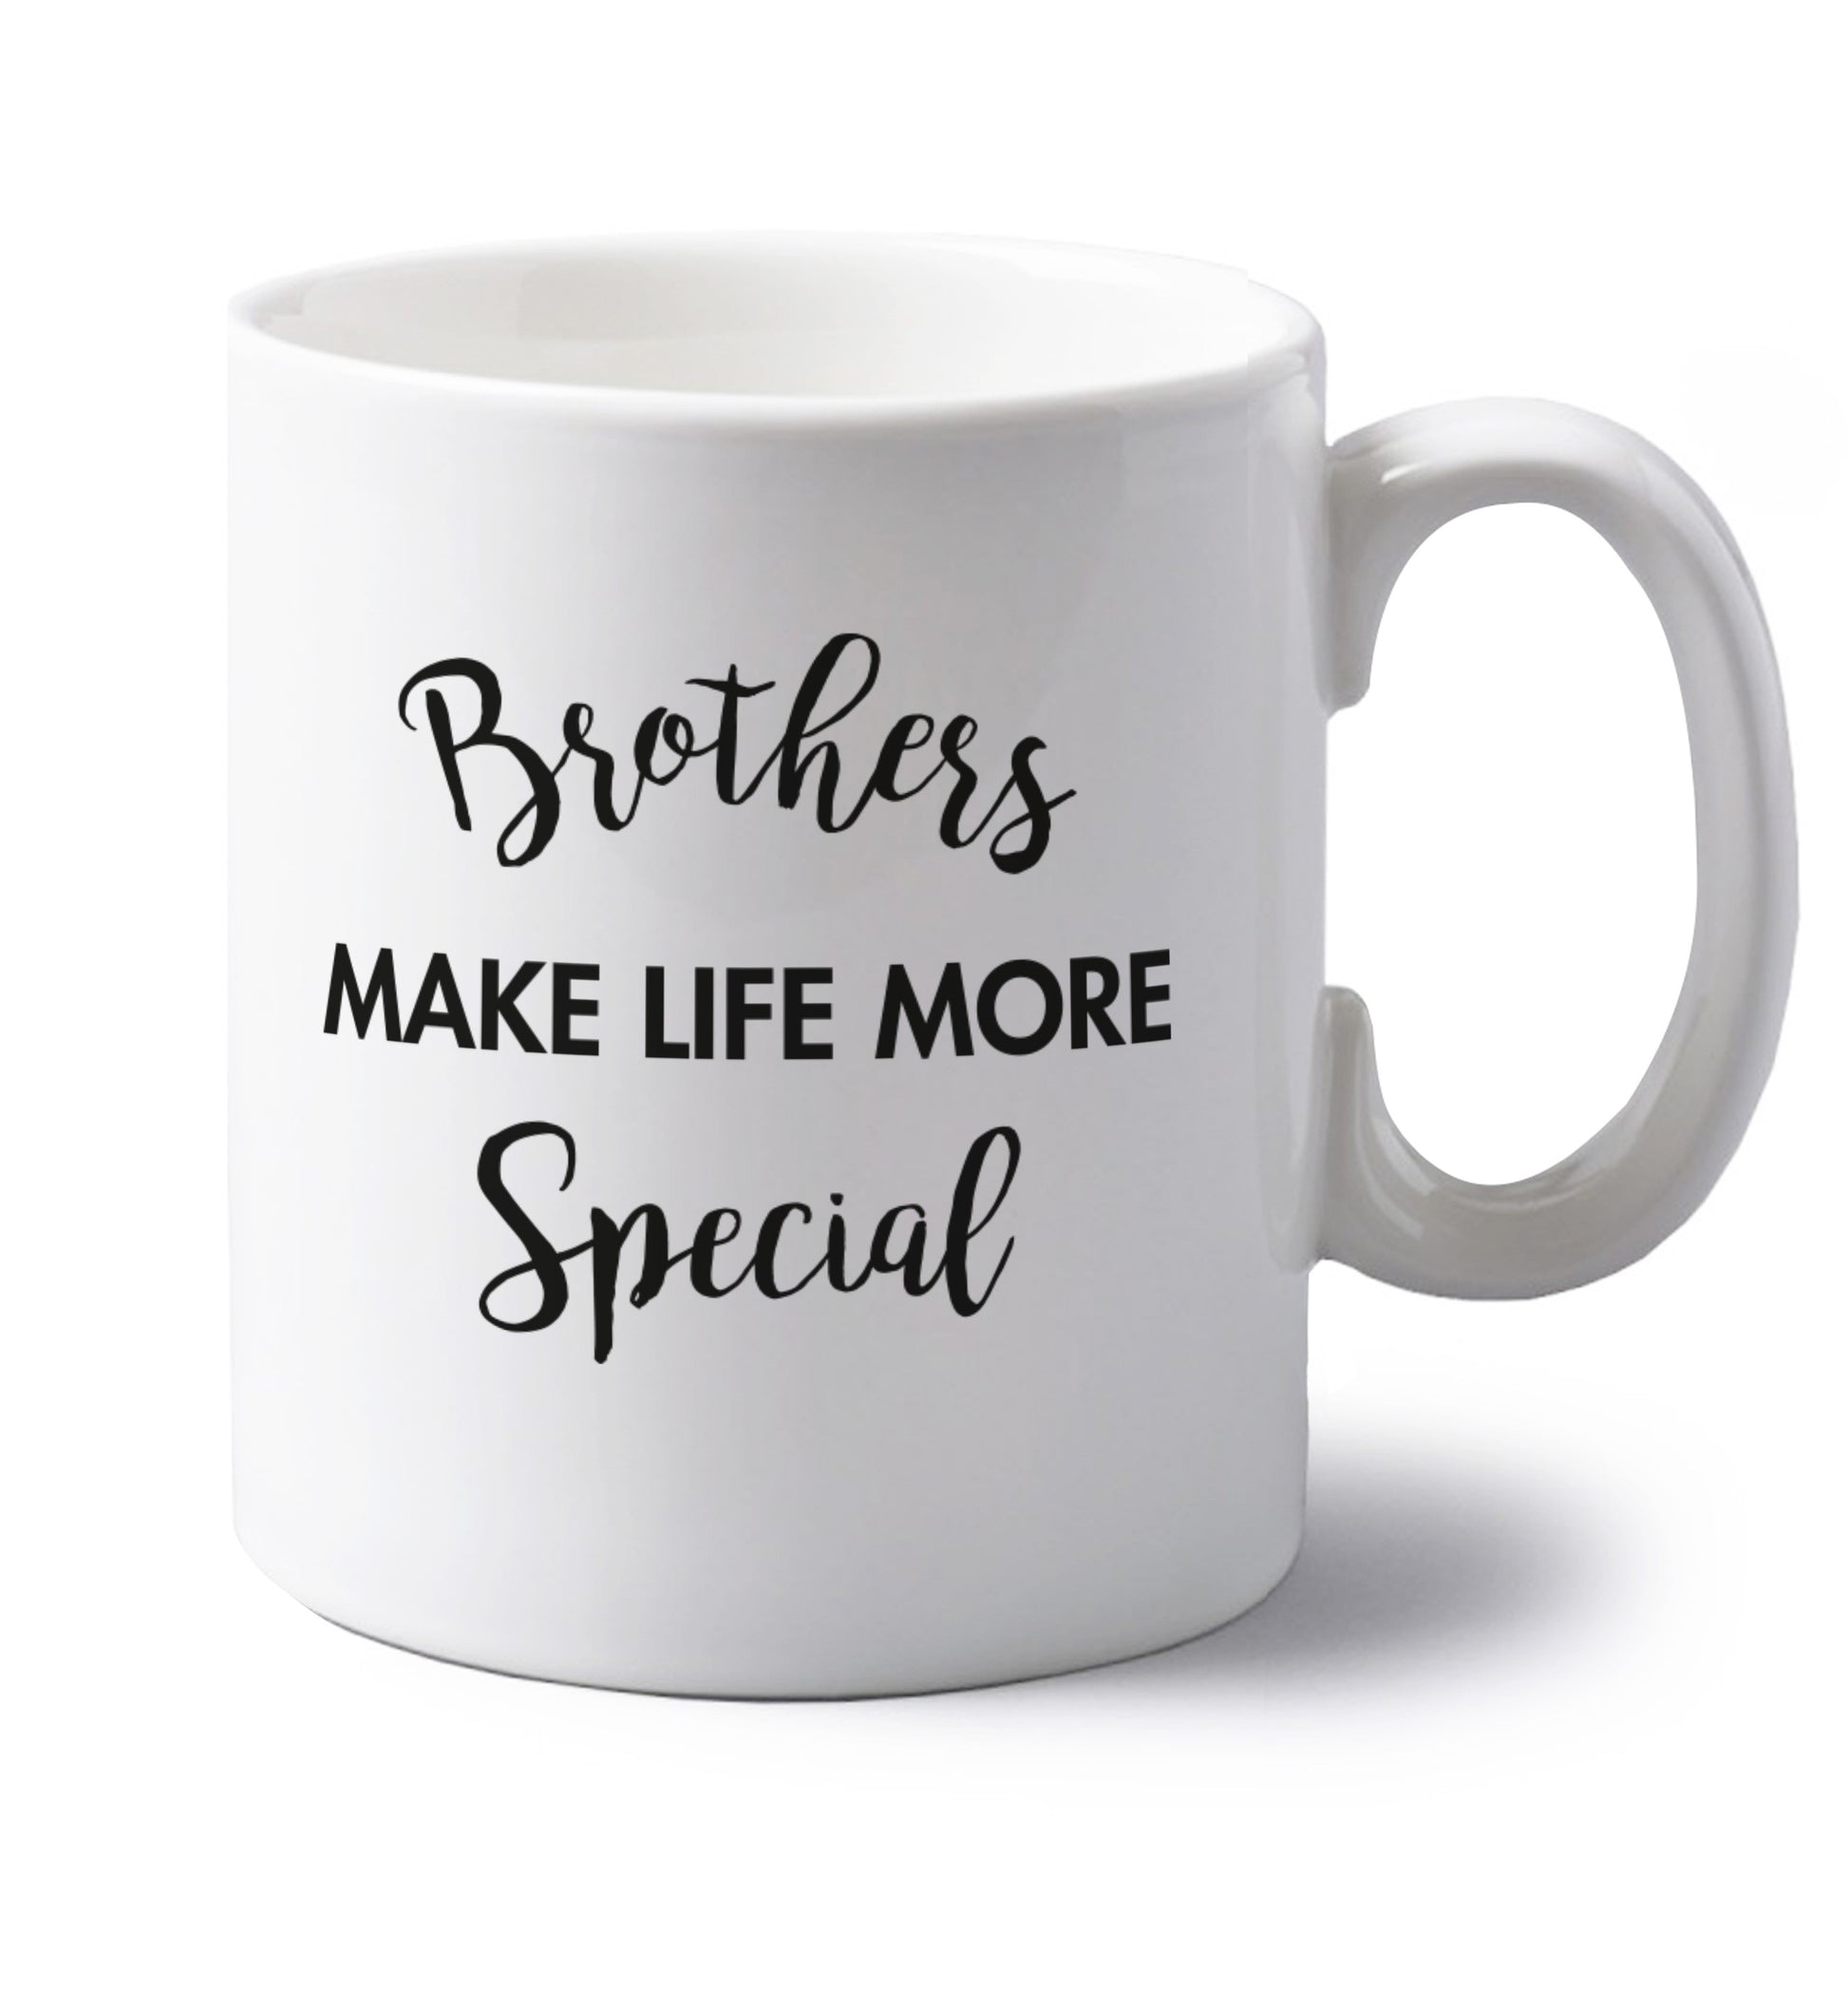 Brothers make life more special left handed white ceramic mug 